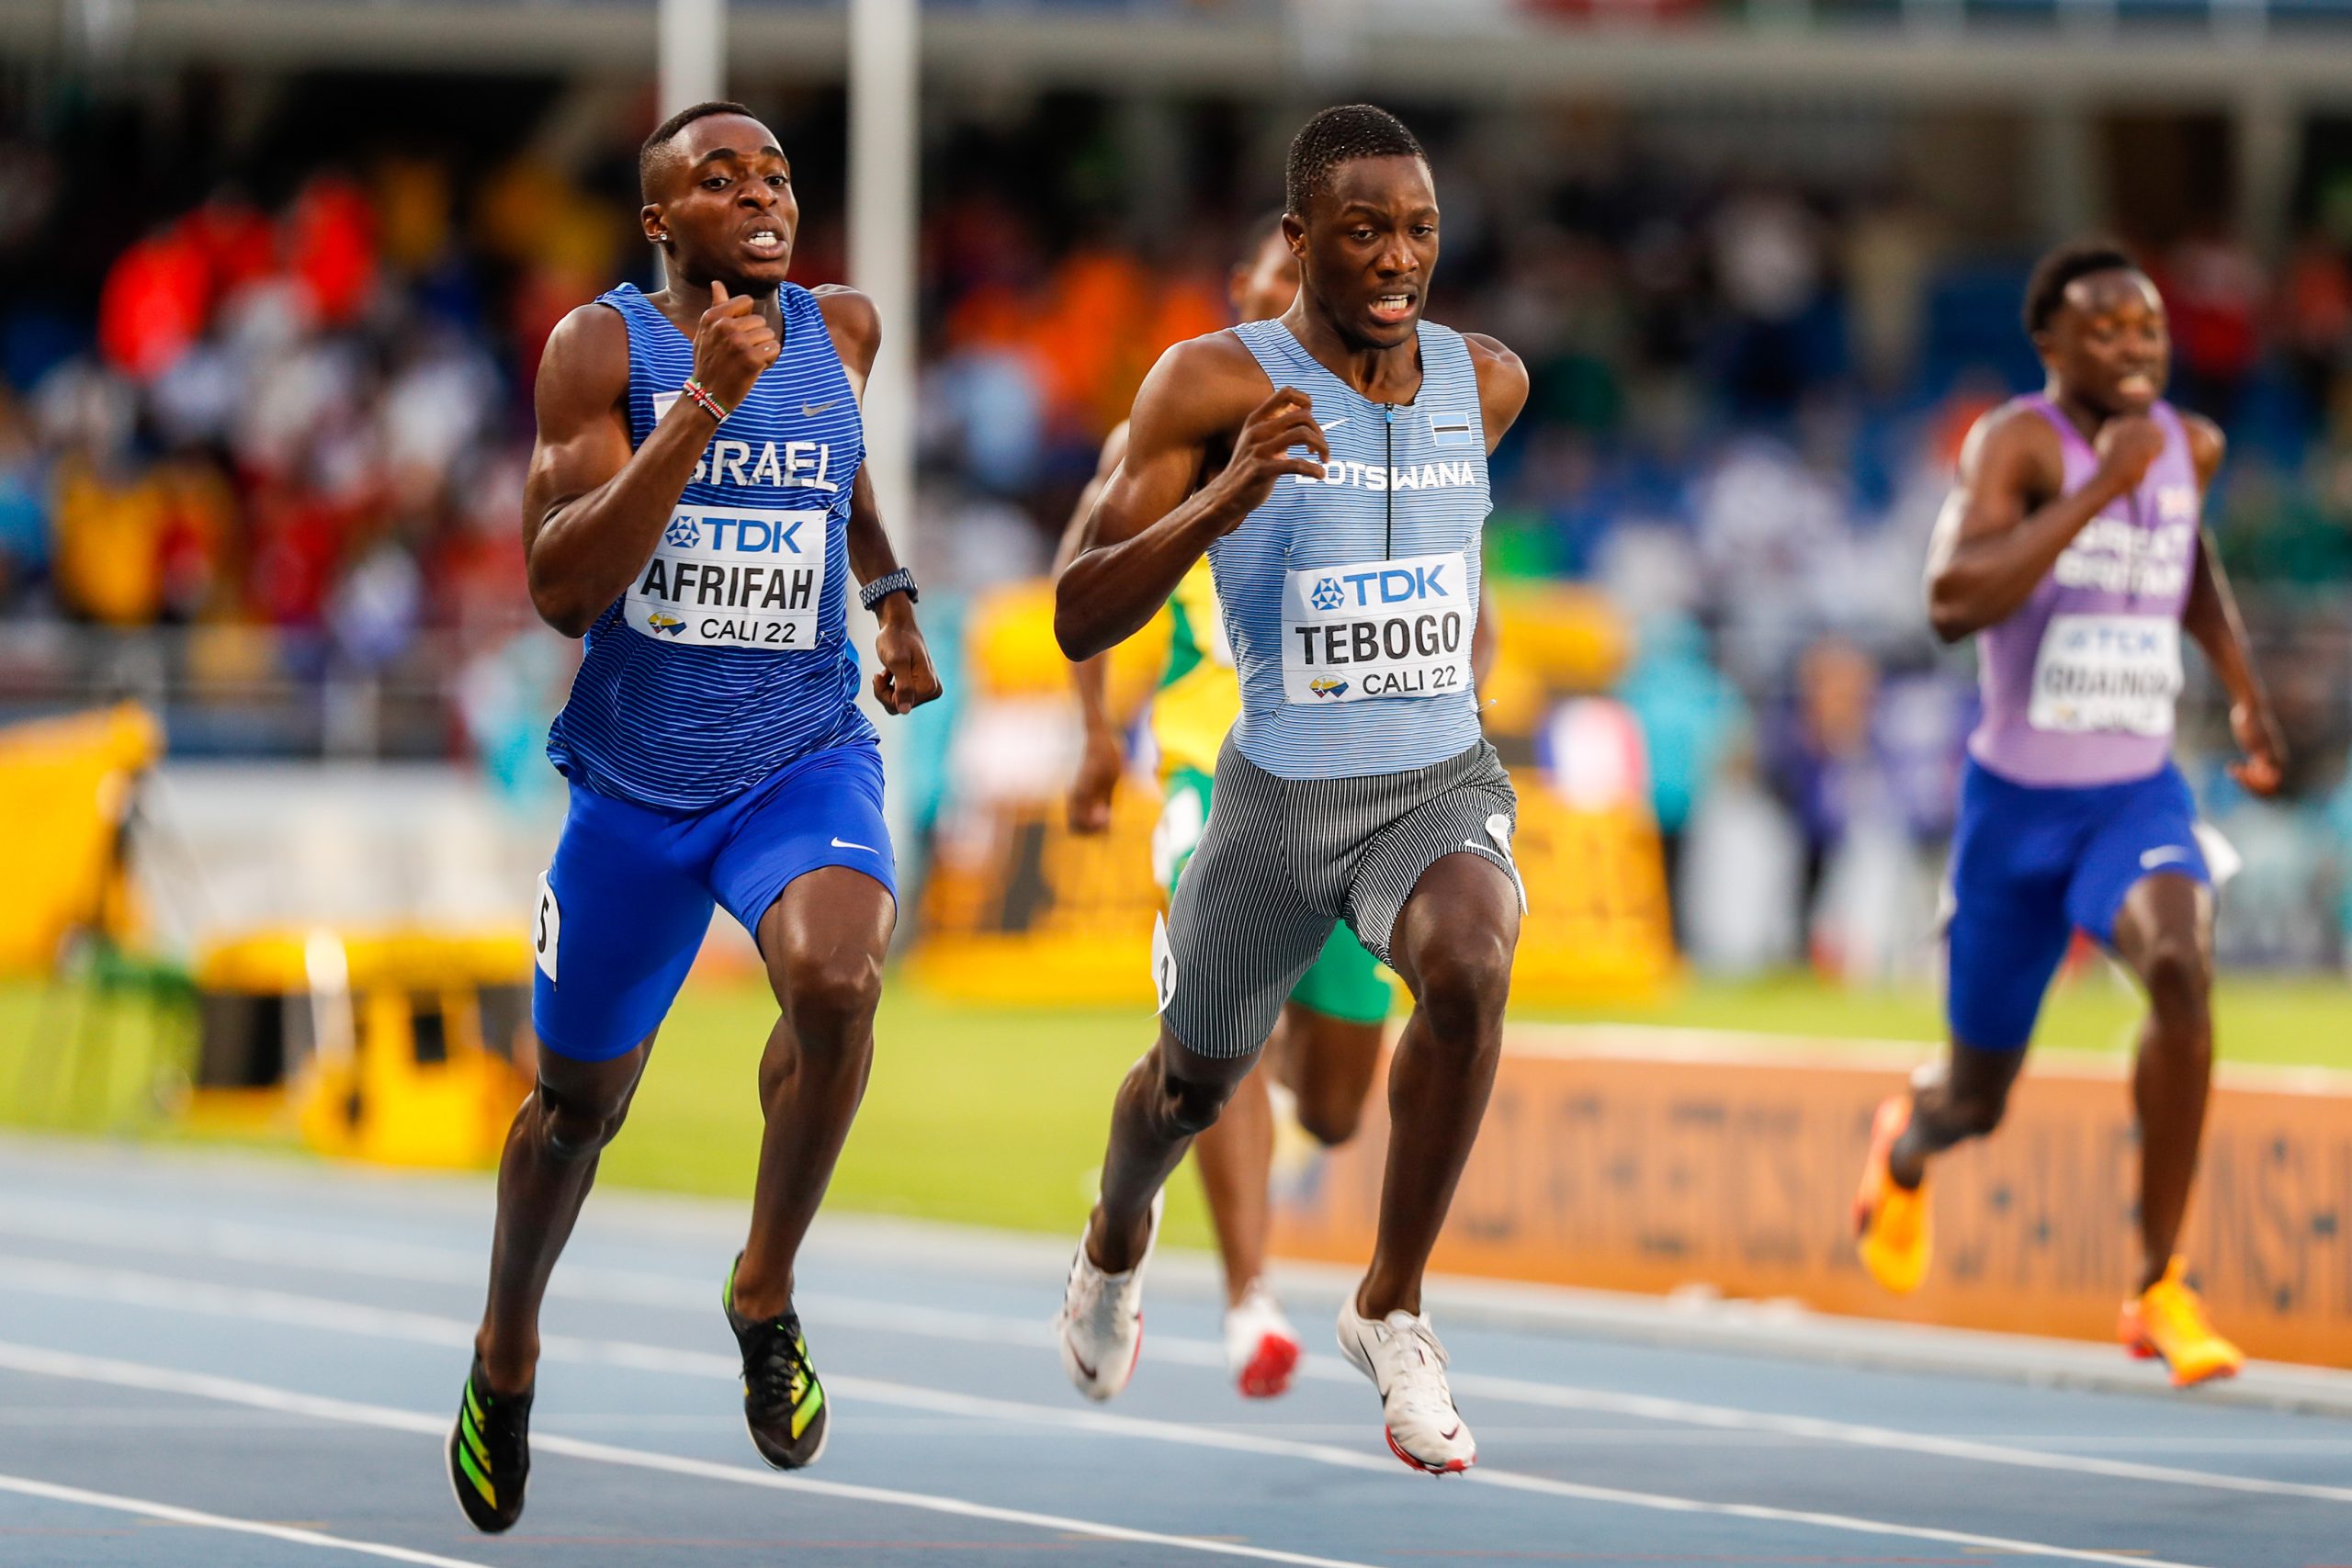 Blessing Akawasi Afrifah beats Letsile Tebogo to the world U20 200m title in Cali (© Oscar Munoz Badilla)